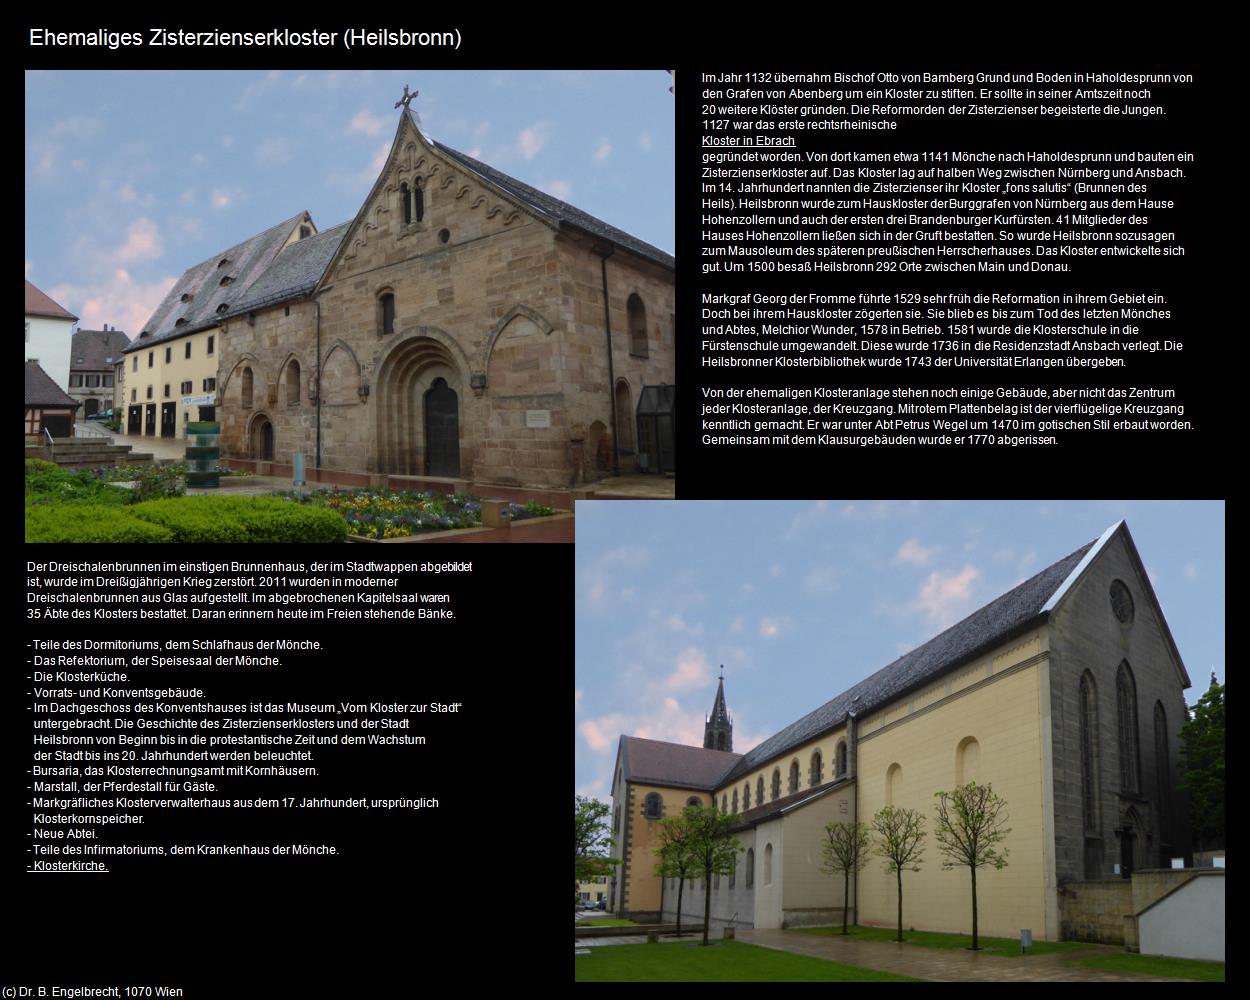 Ehem. Zisterzienserkloster (Heilsbronn) in Kulturatlas-BAYERN(c)B.Engelbrecht